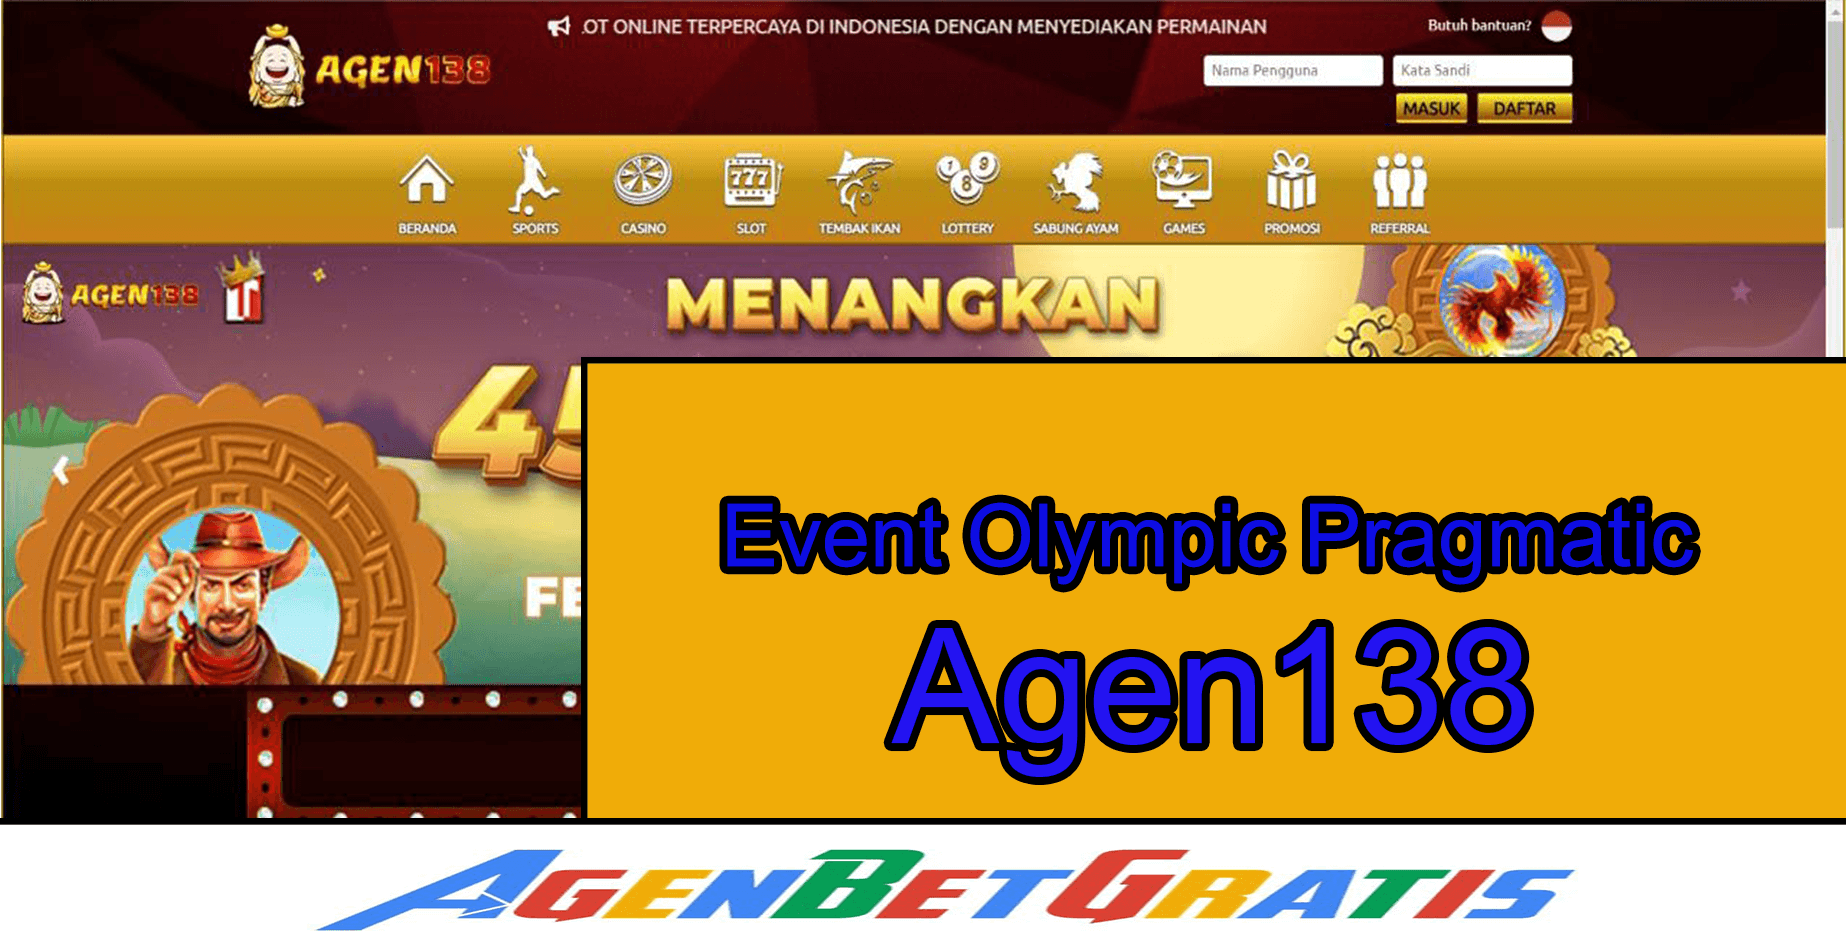 AGEN138 - Event Olympic Pragmatic